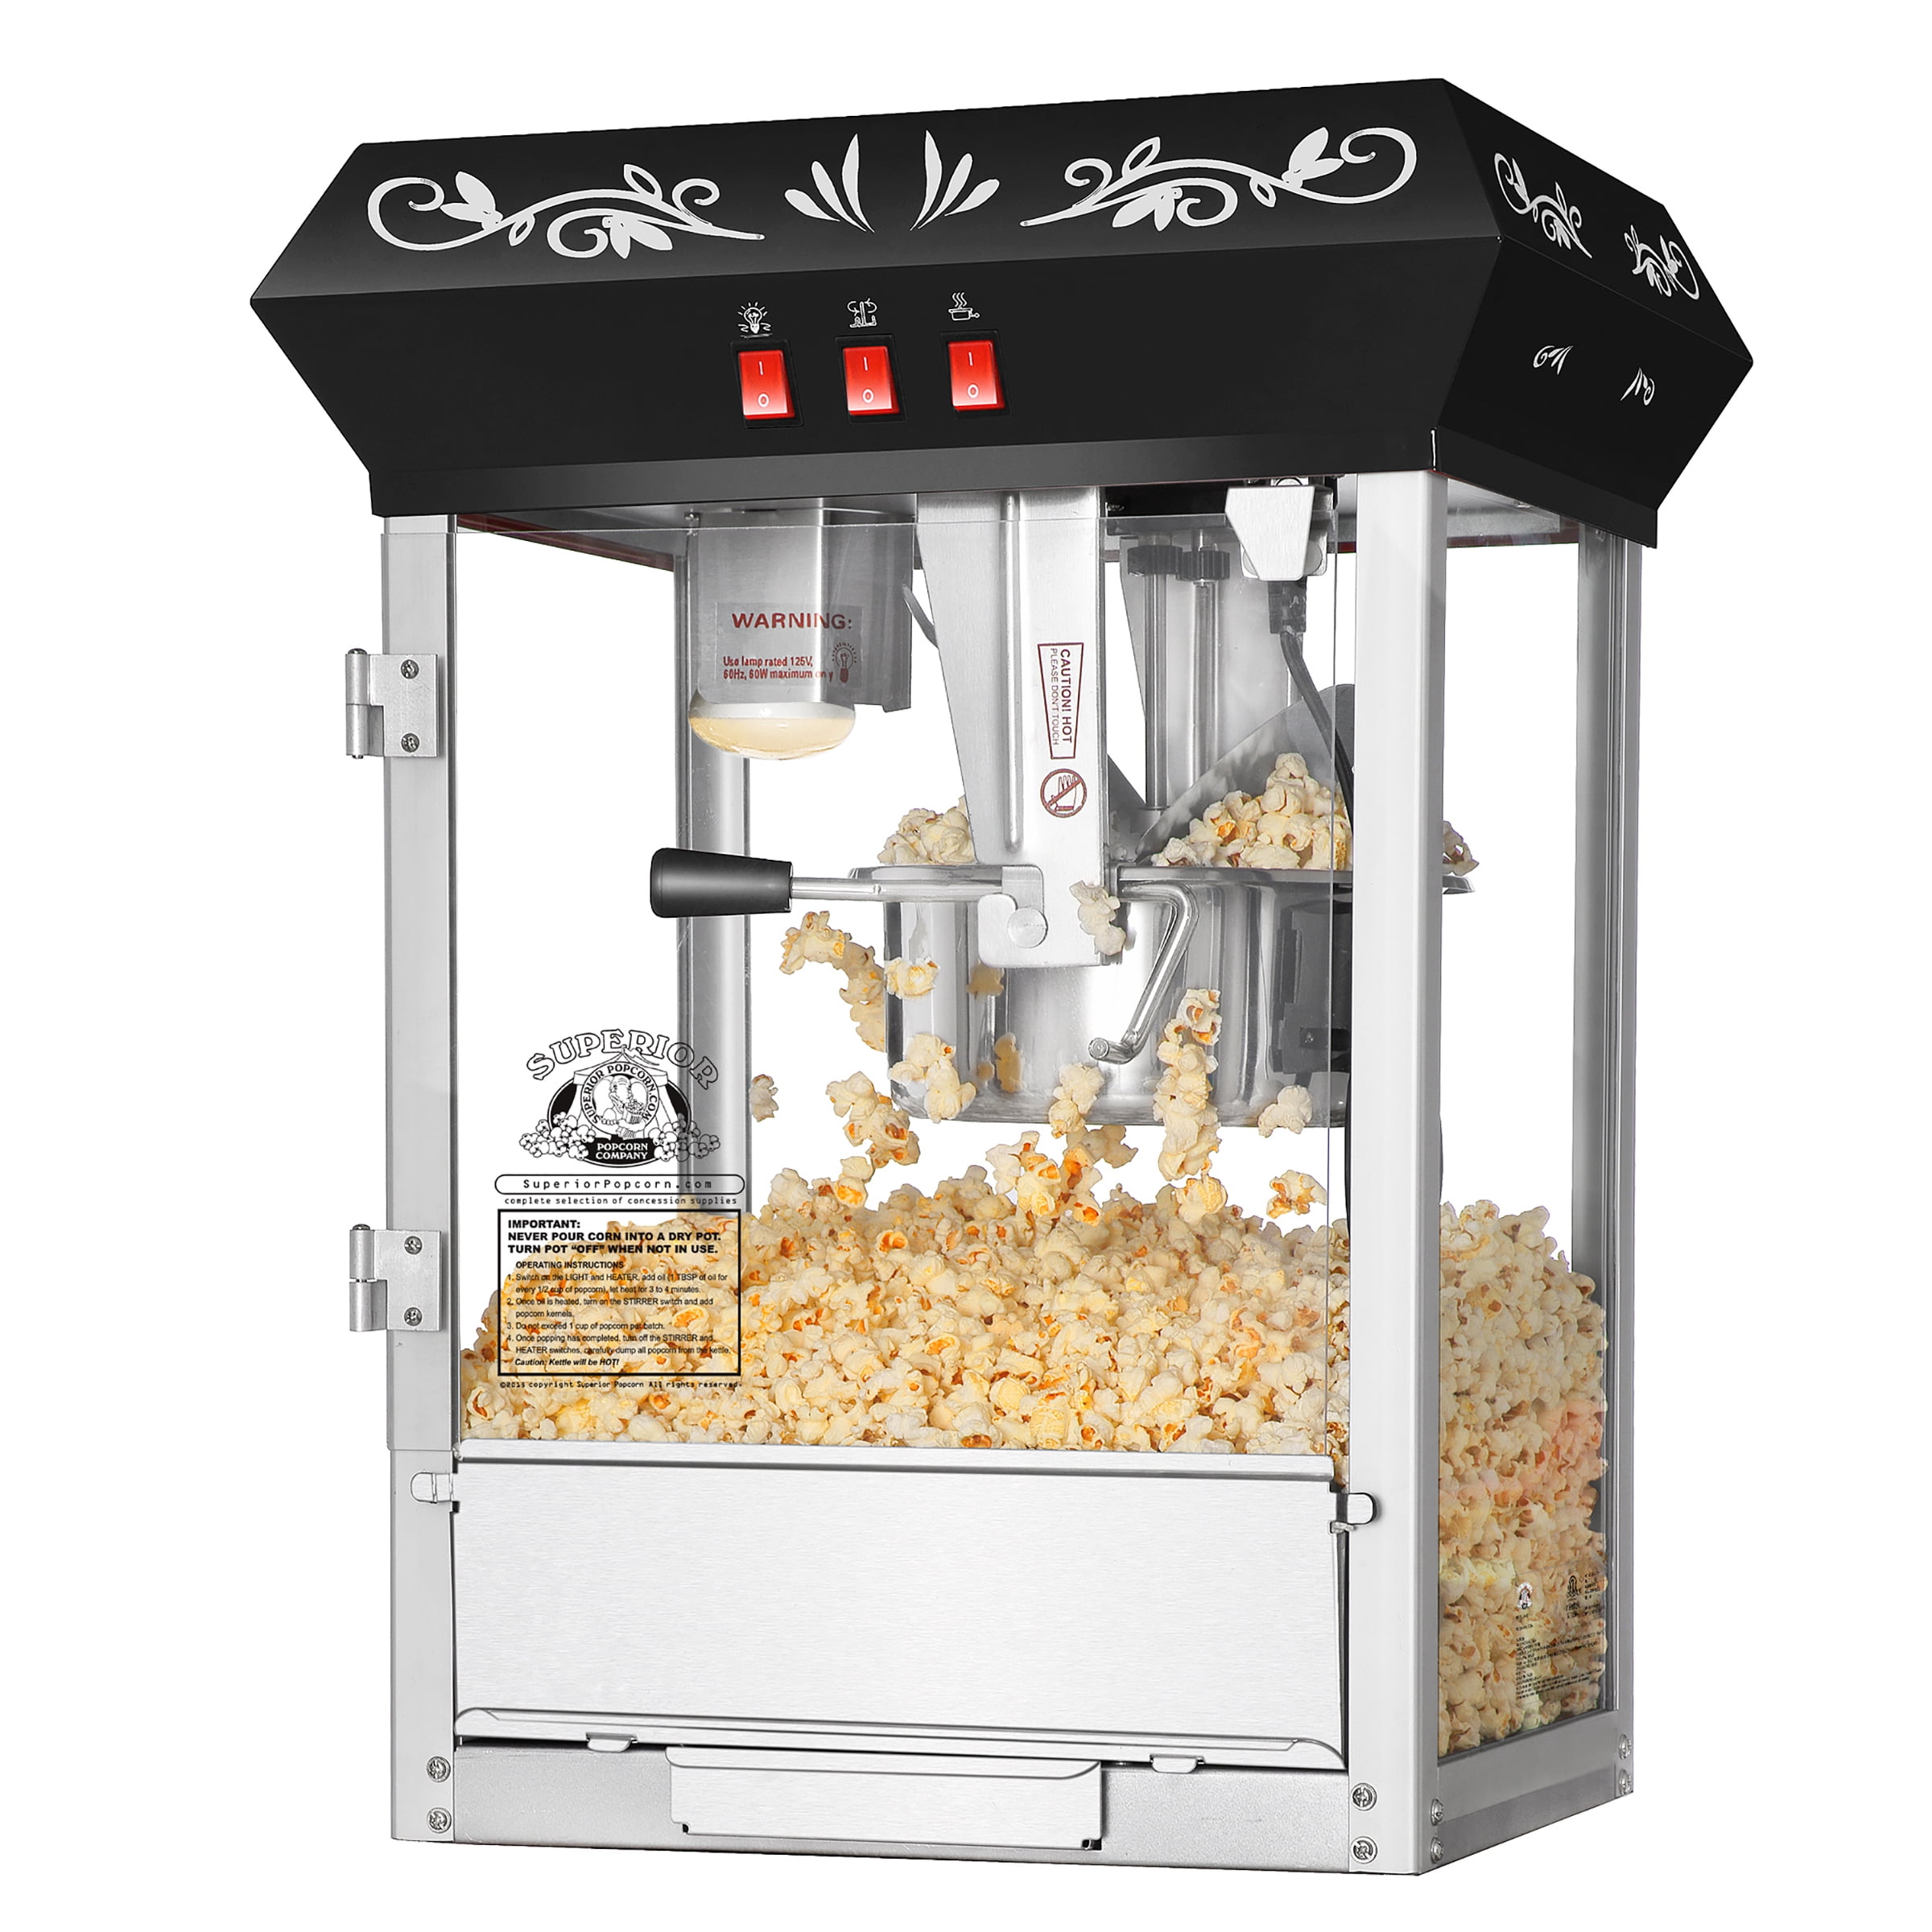 Franklin&s Original Whirley Pop Stovetop Popcorn Machine Popper. Delicious